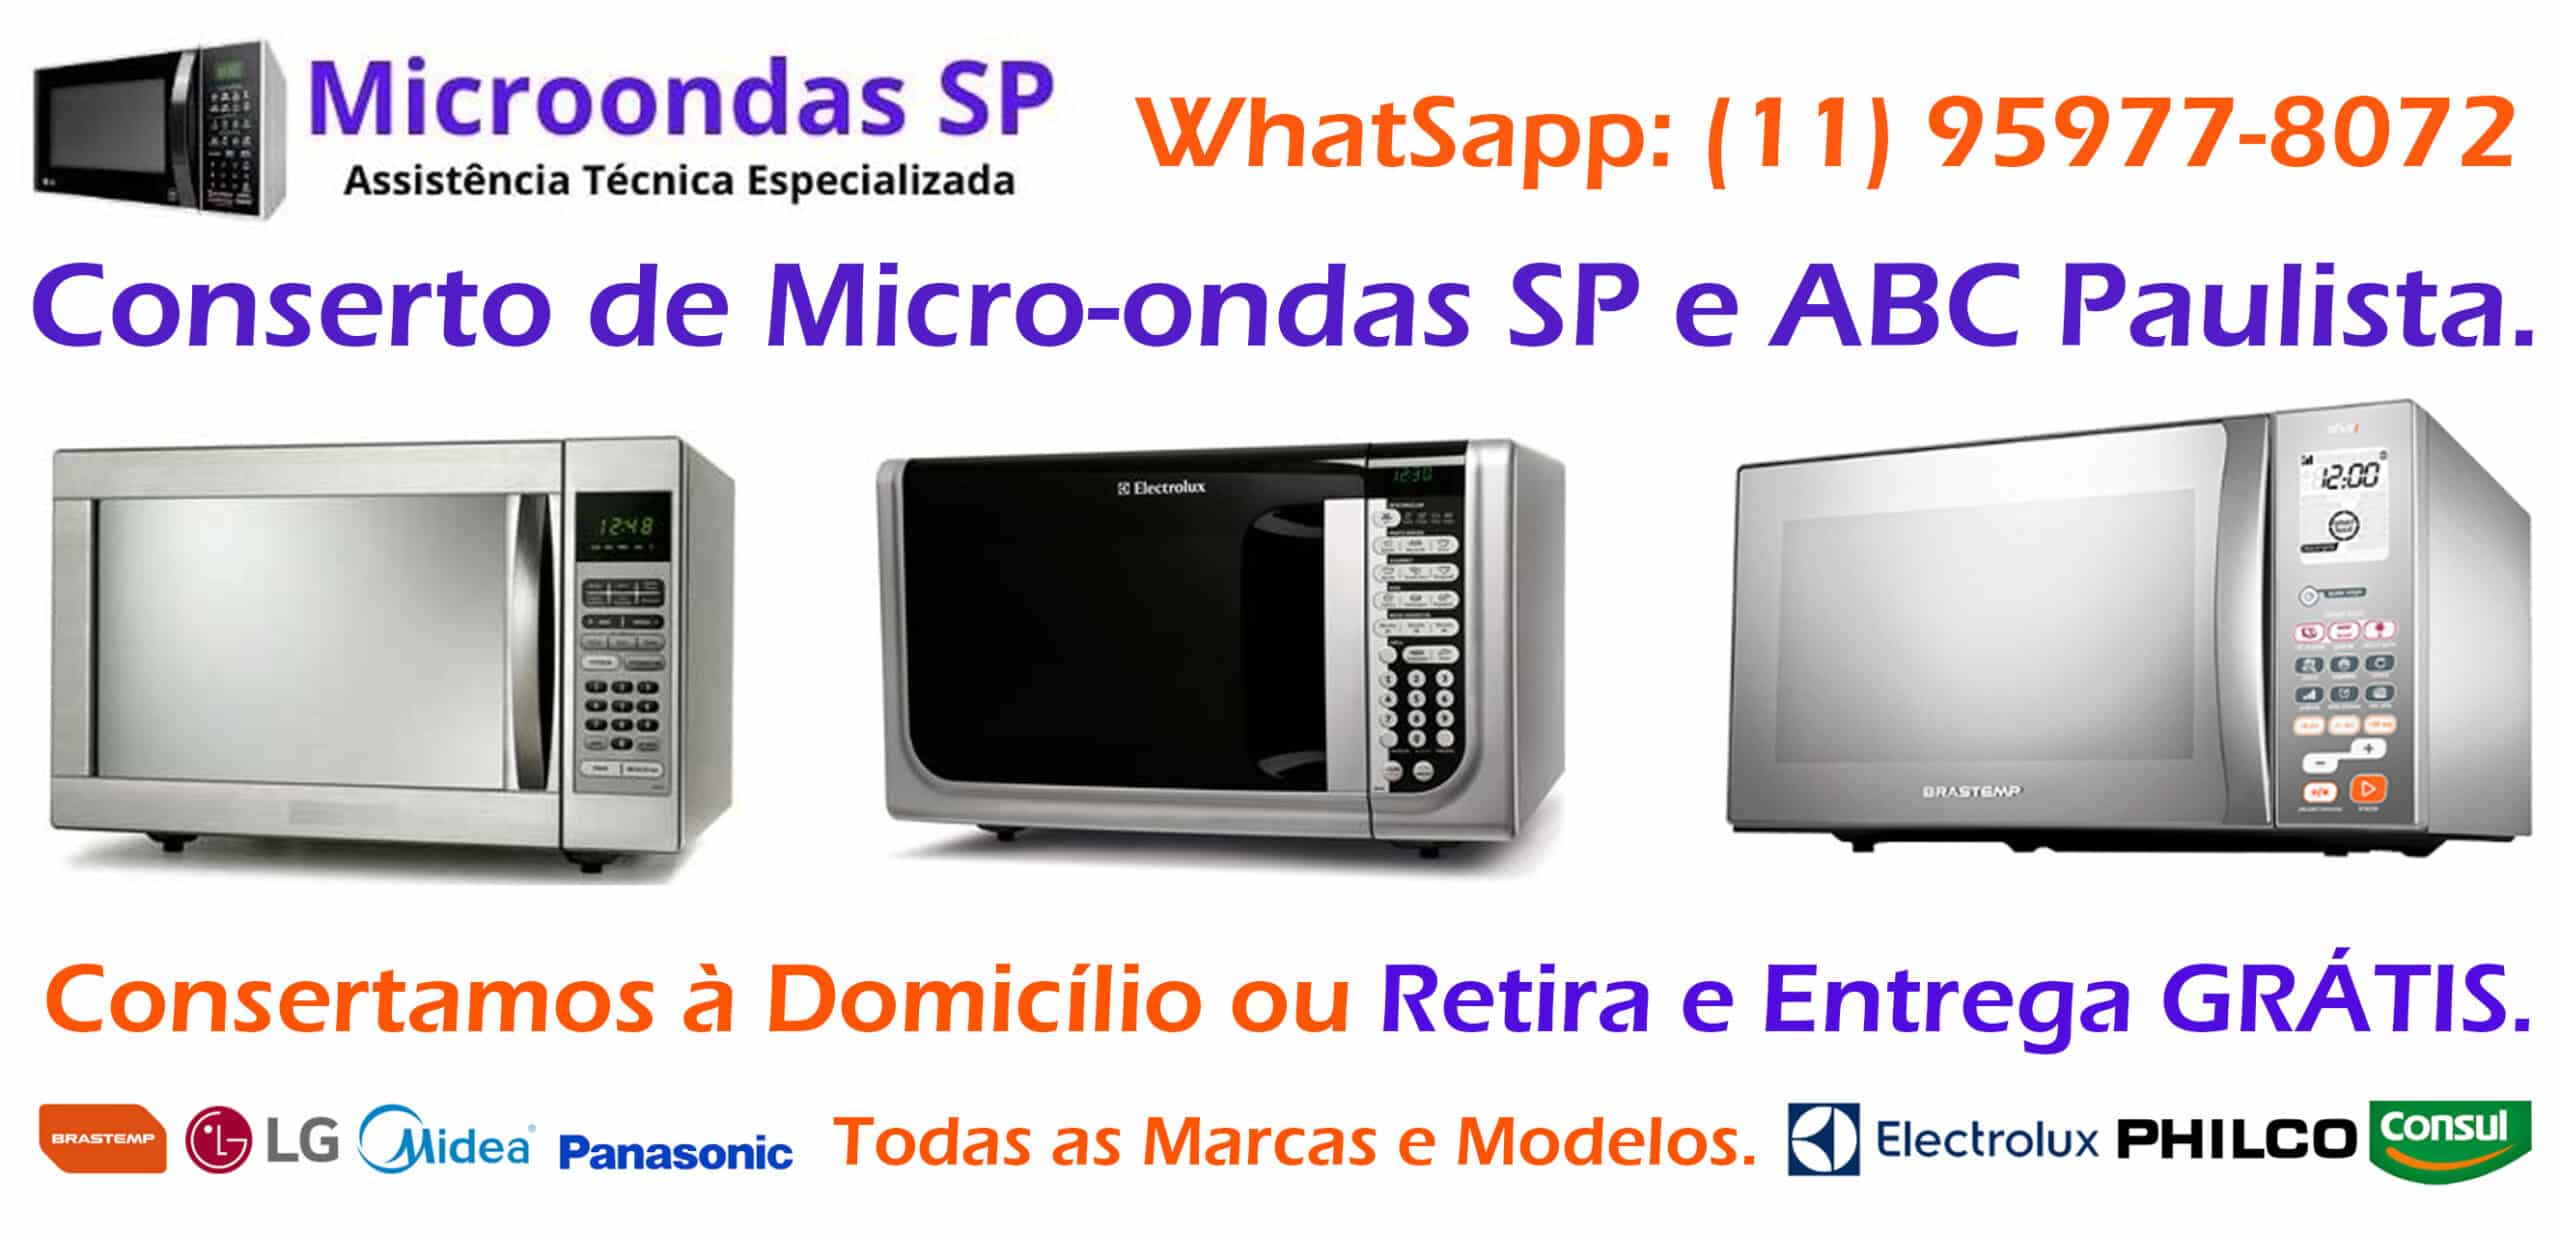 Conserto-Micro-ondas-SP-e-ABC-Paulista-scaled Conserto Micro-ondas LG